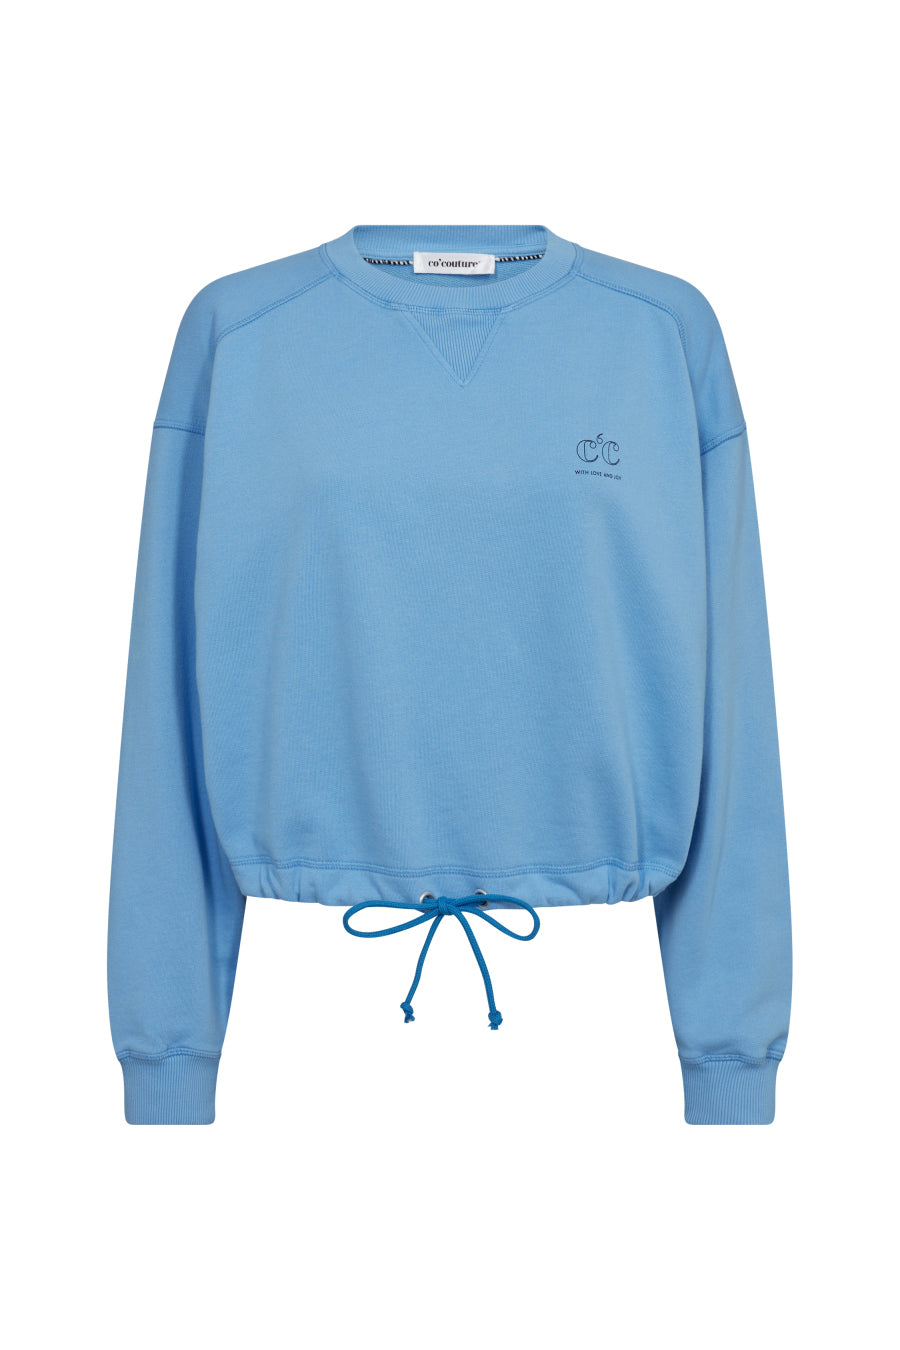 Co'Couture Clean Crop Tie Sweatshirt - Sky Blue - RUM Amsterdam